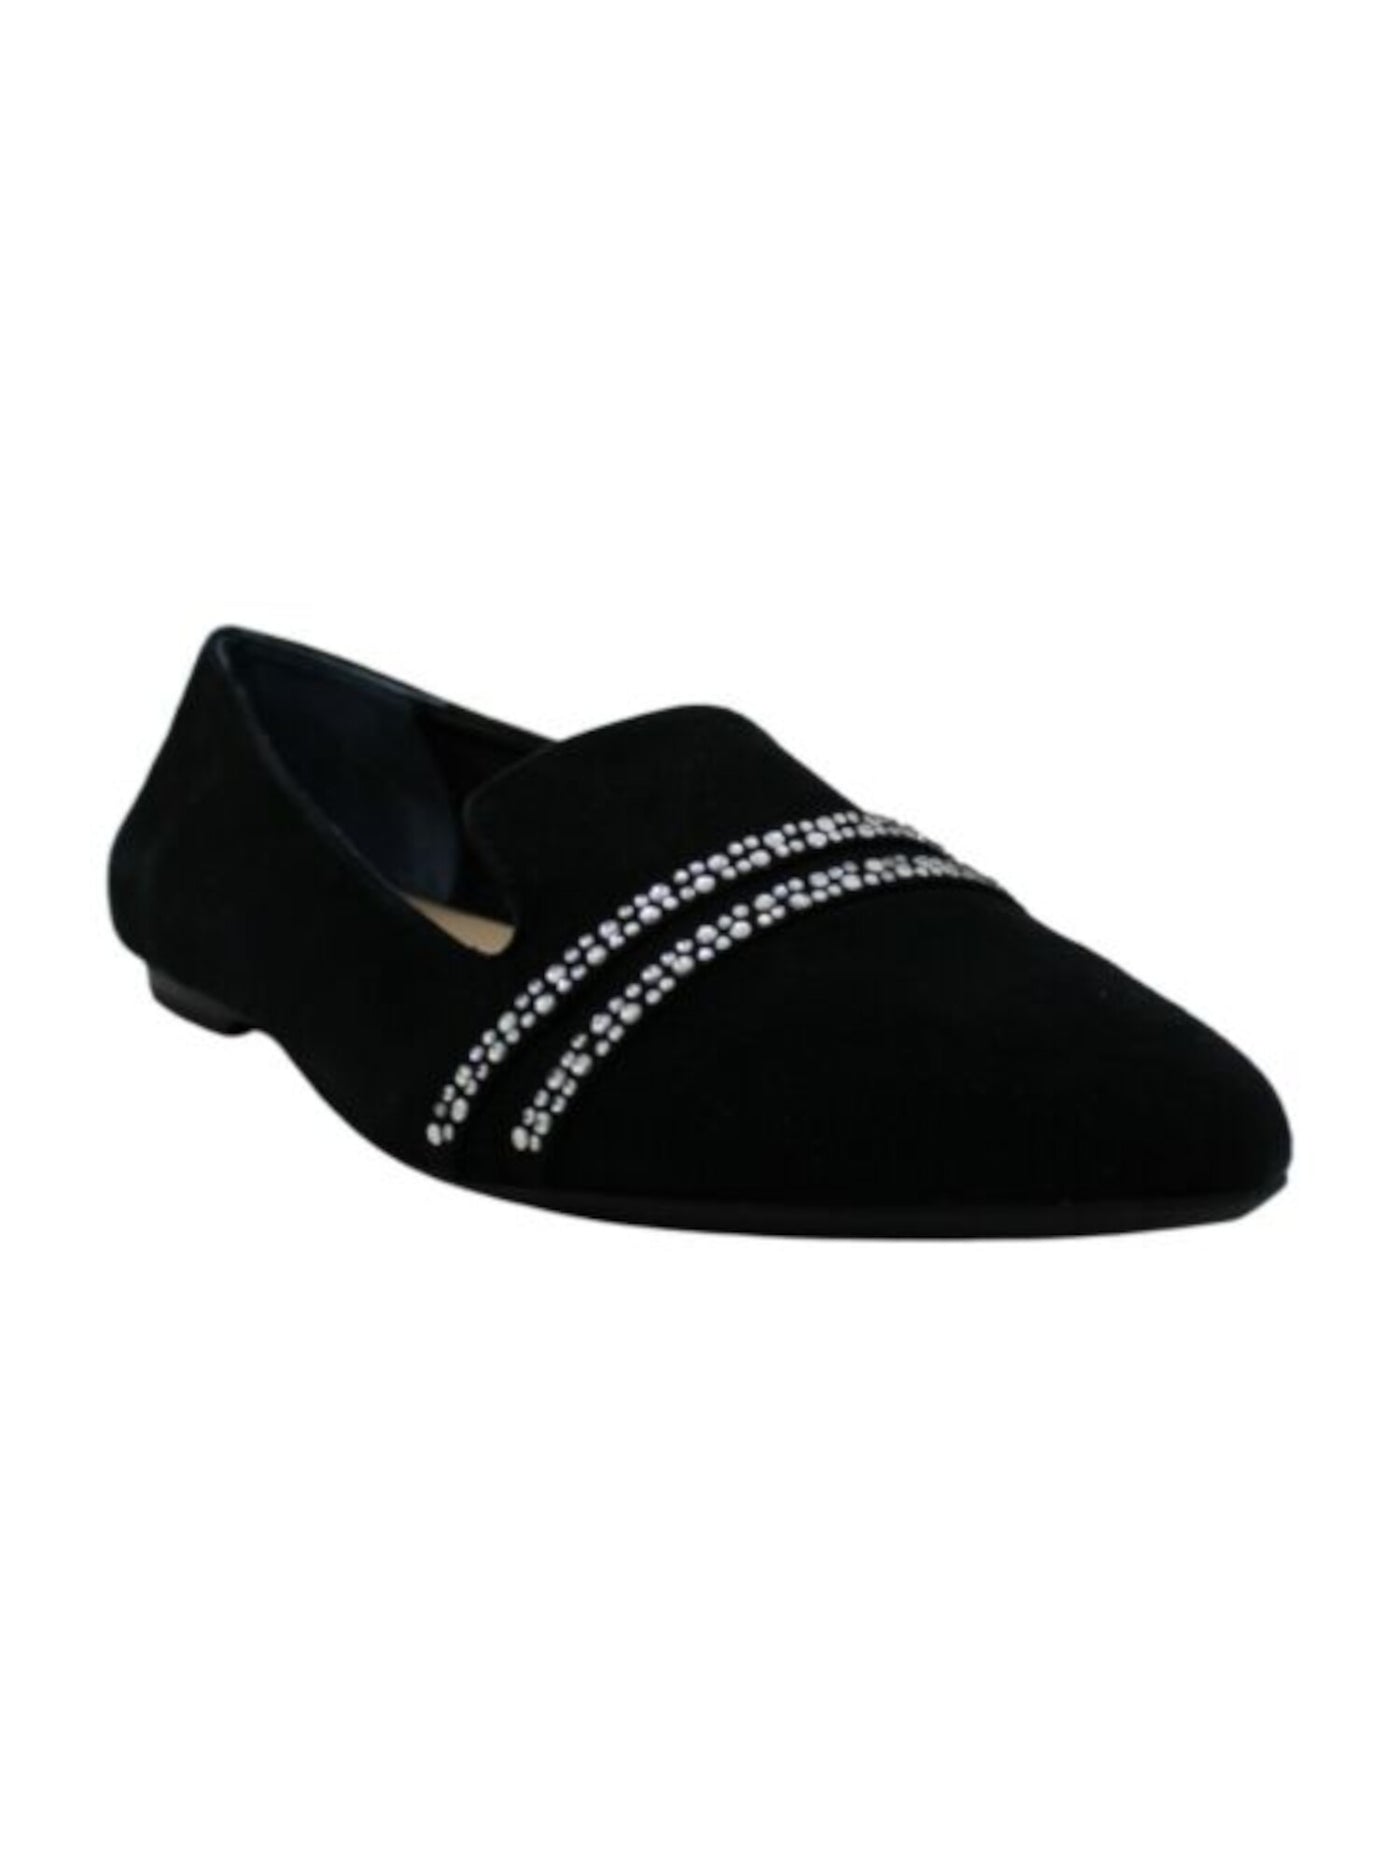 ALFANI Womens Black Step 'N Flex Technology Rhinestone Poee Pointed Toe Slip On Leather Loafers Shoes 9.5 M